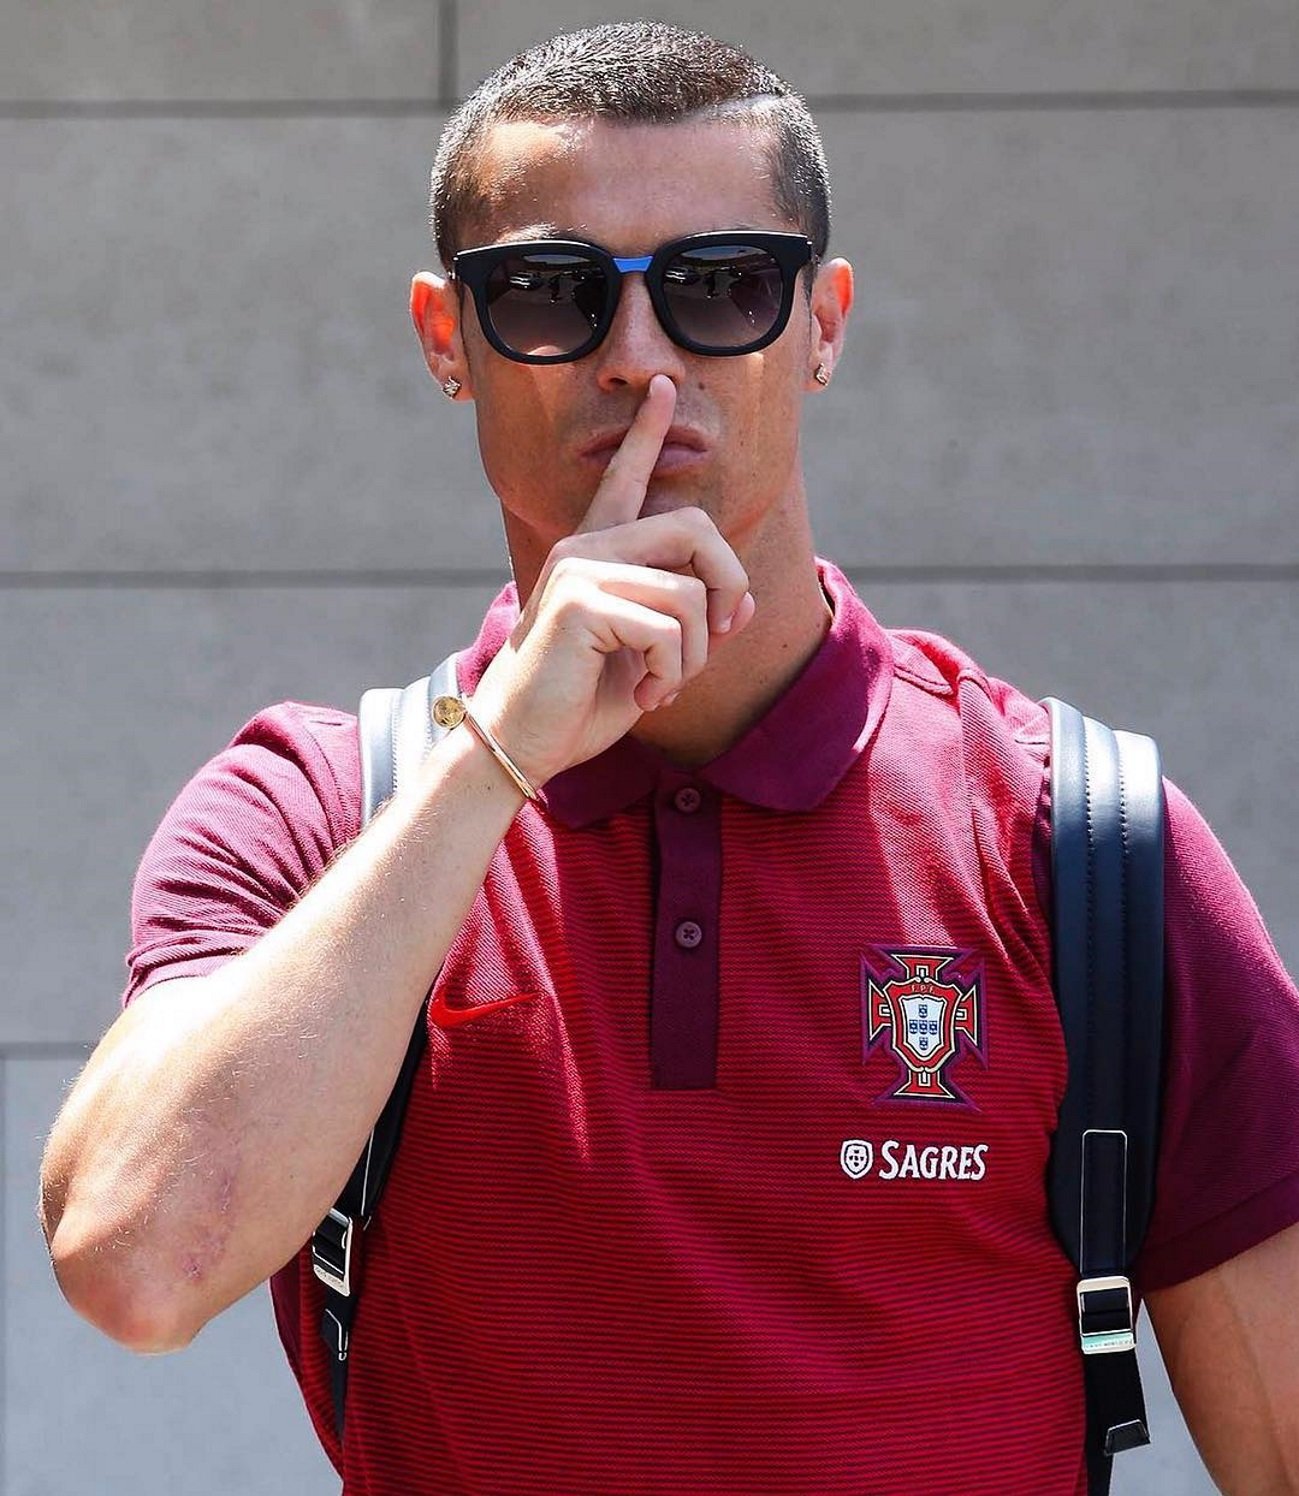 Hisenda adverteix Cristiano Ronaldo que encara pot anar a la presó